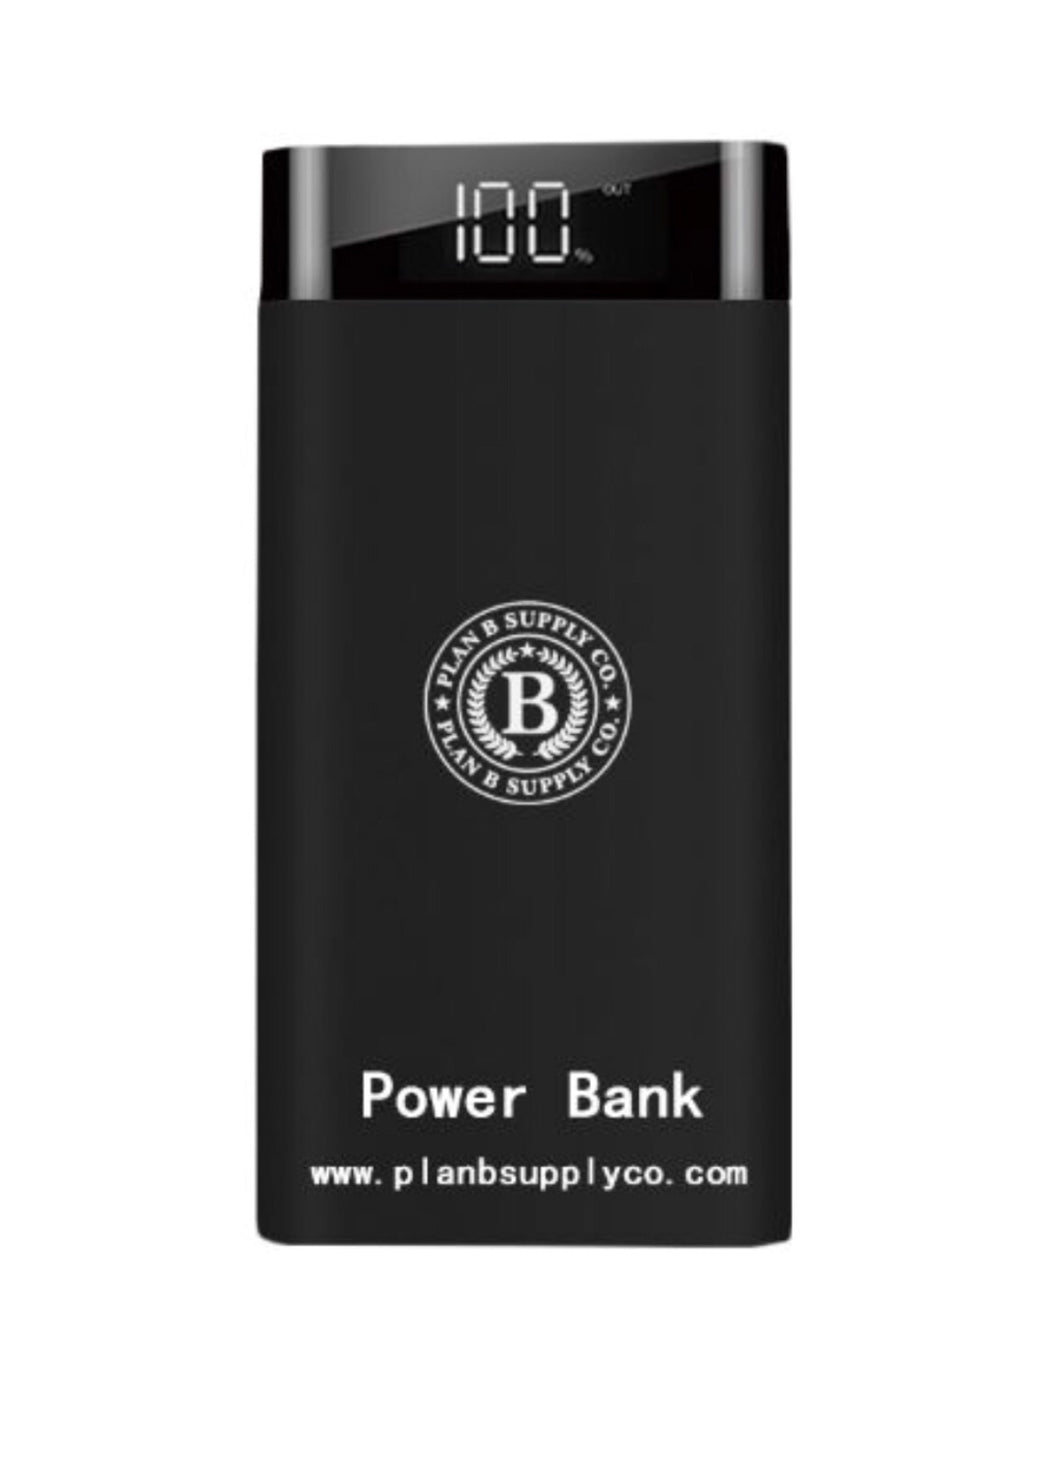 Plan b supply Co power bank 20,000 mah